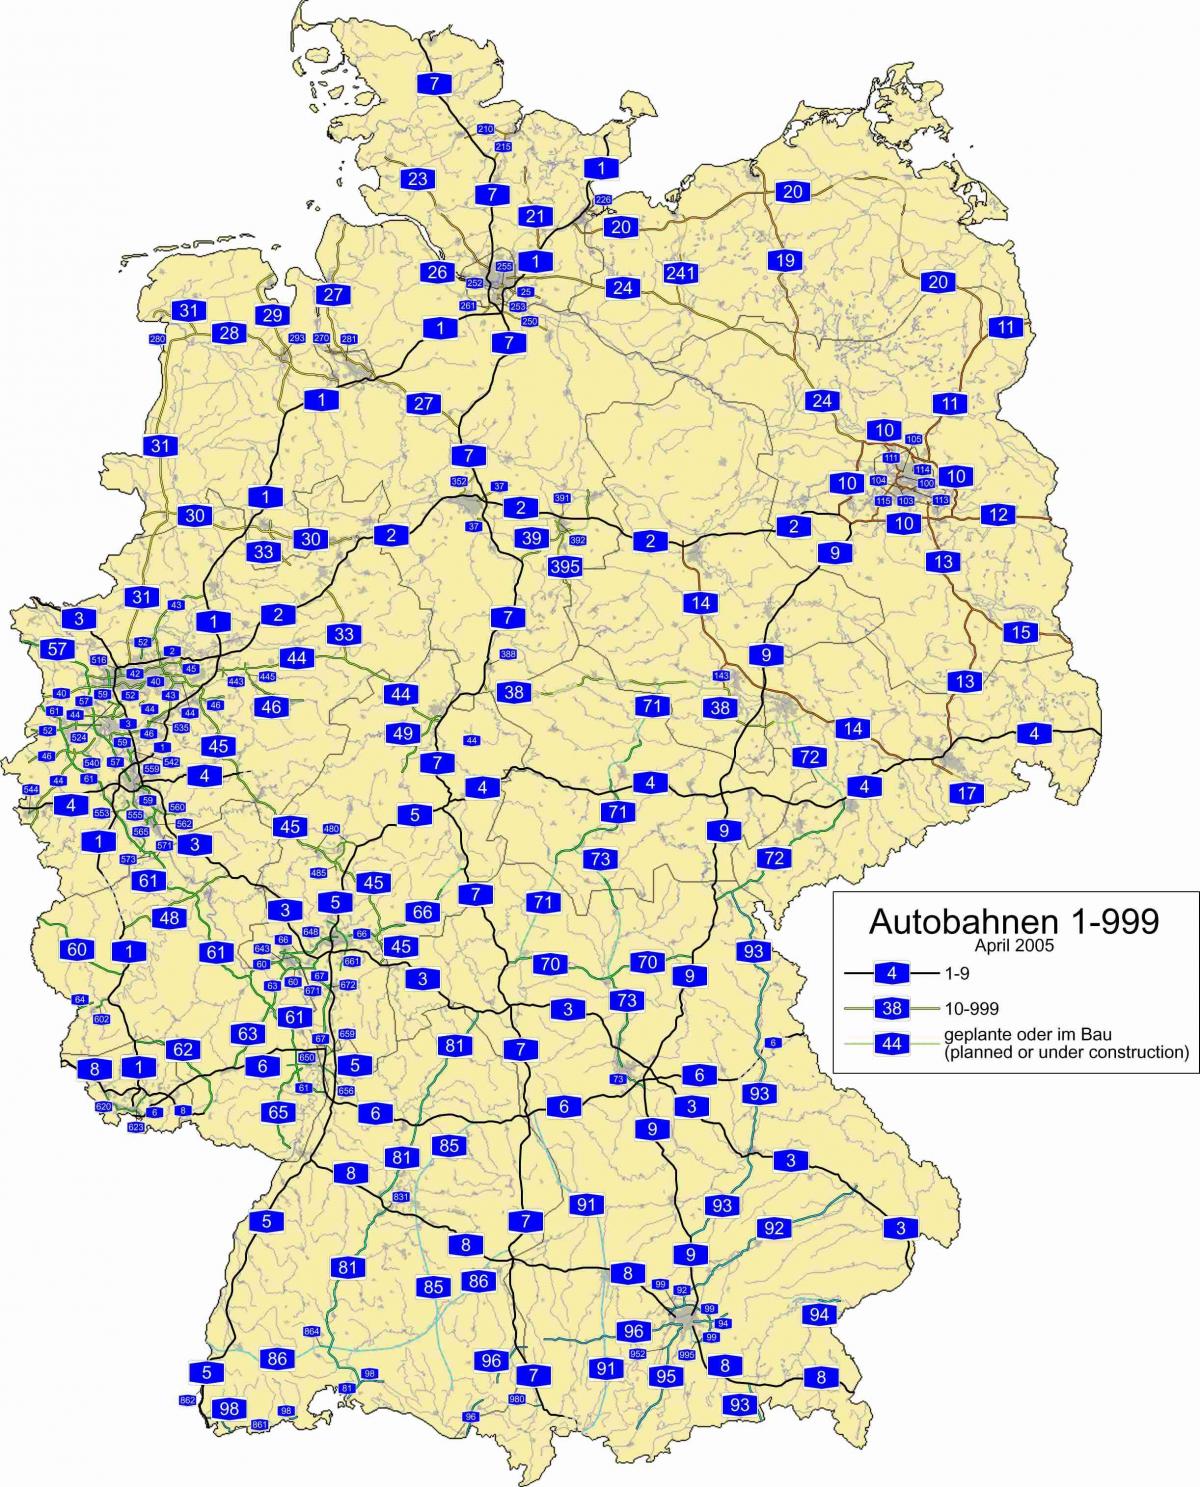 Snelwegkaart van Duitsland